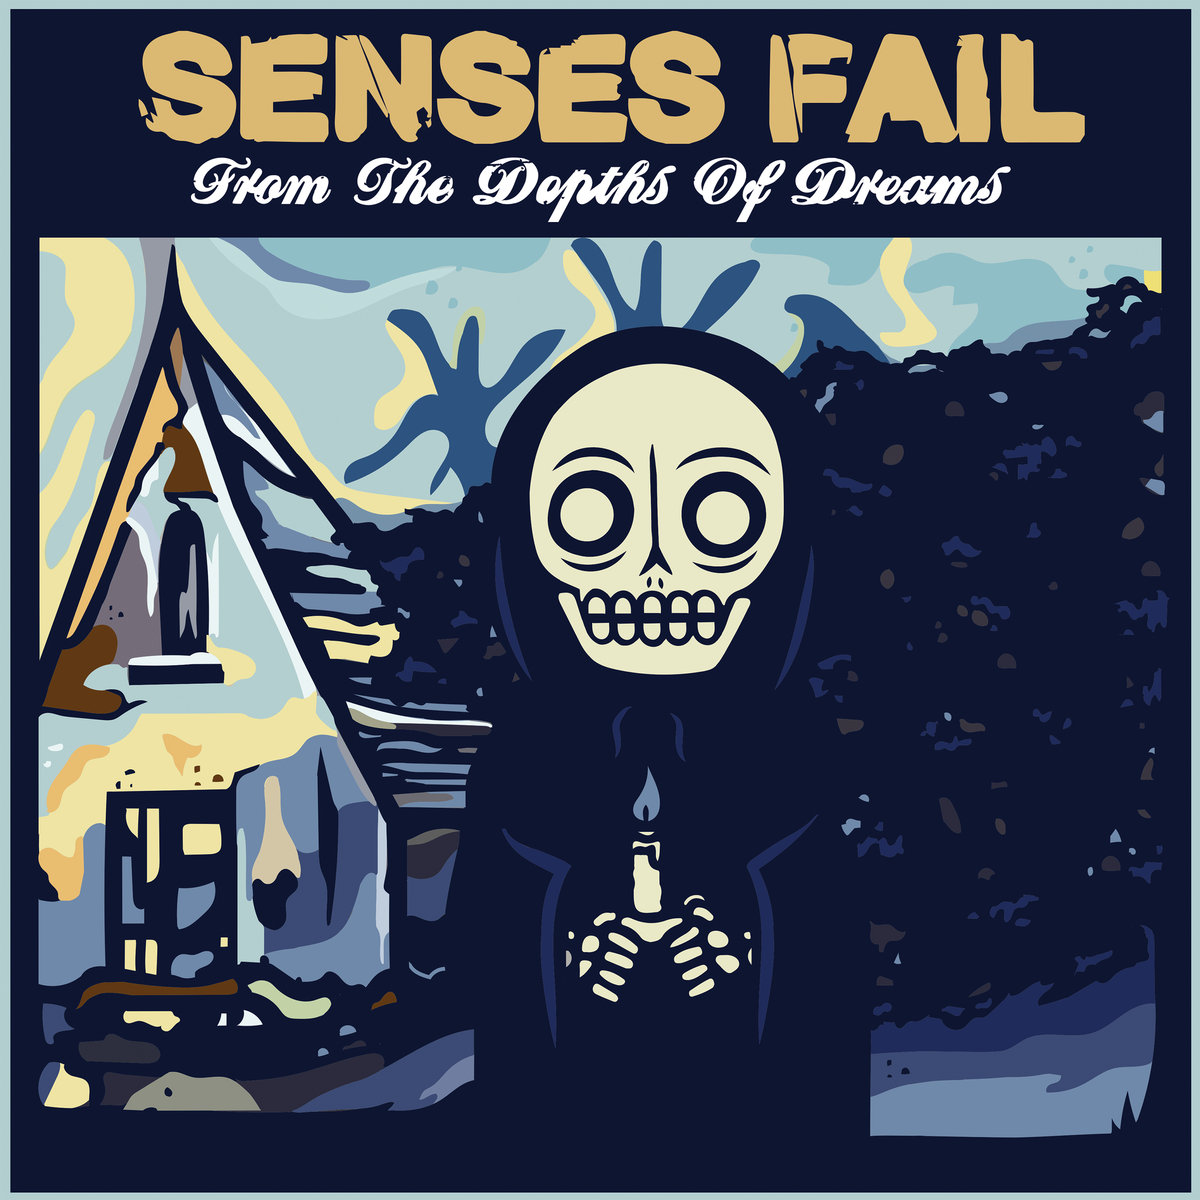 New Senses Fail Album for Review